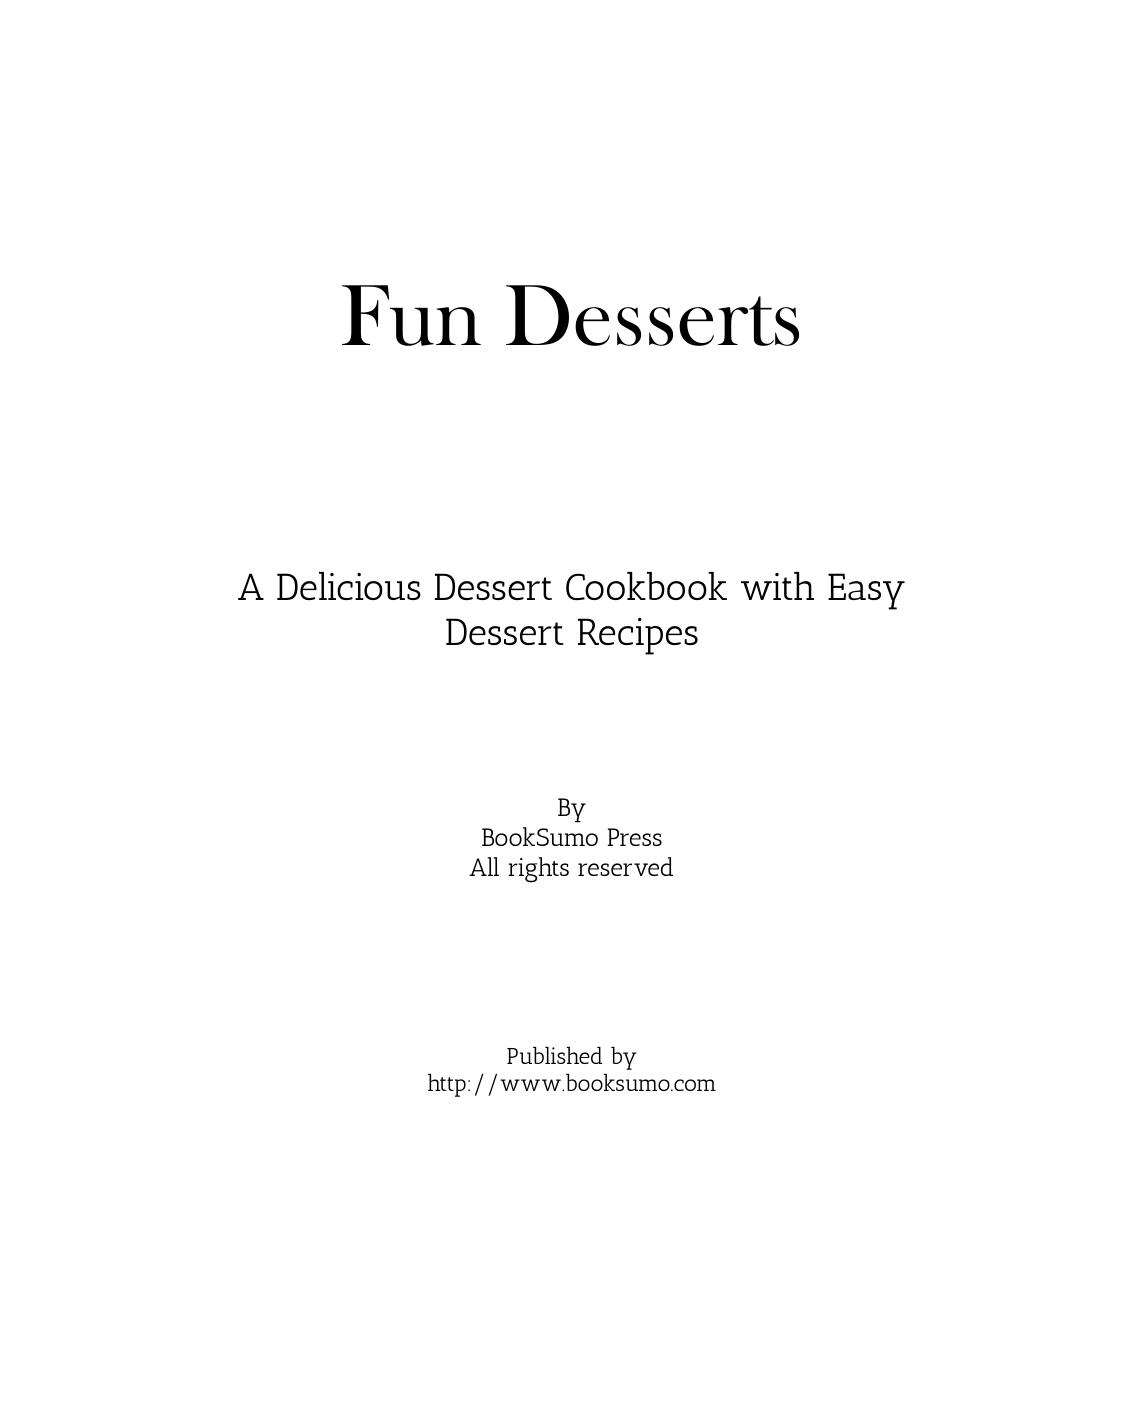 Fun Desserts: A Delicious Snack Cookbook with Easy Dessert Recipes by BookSumo Press